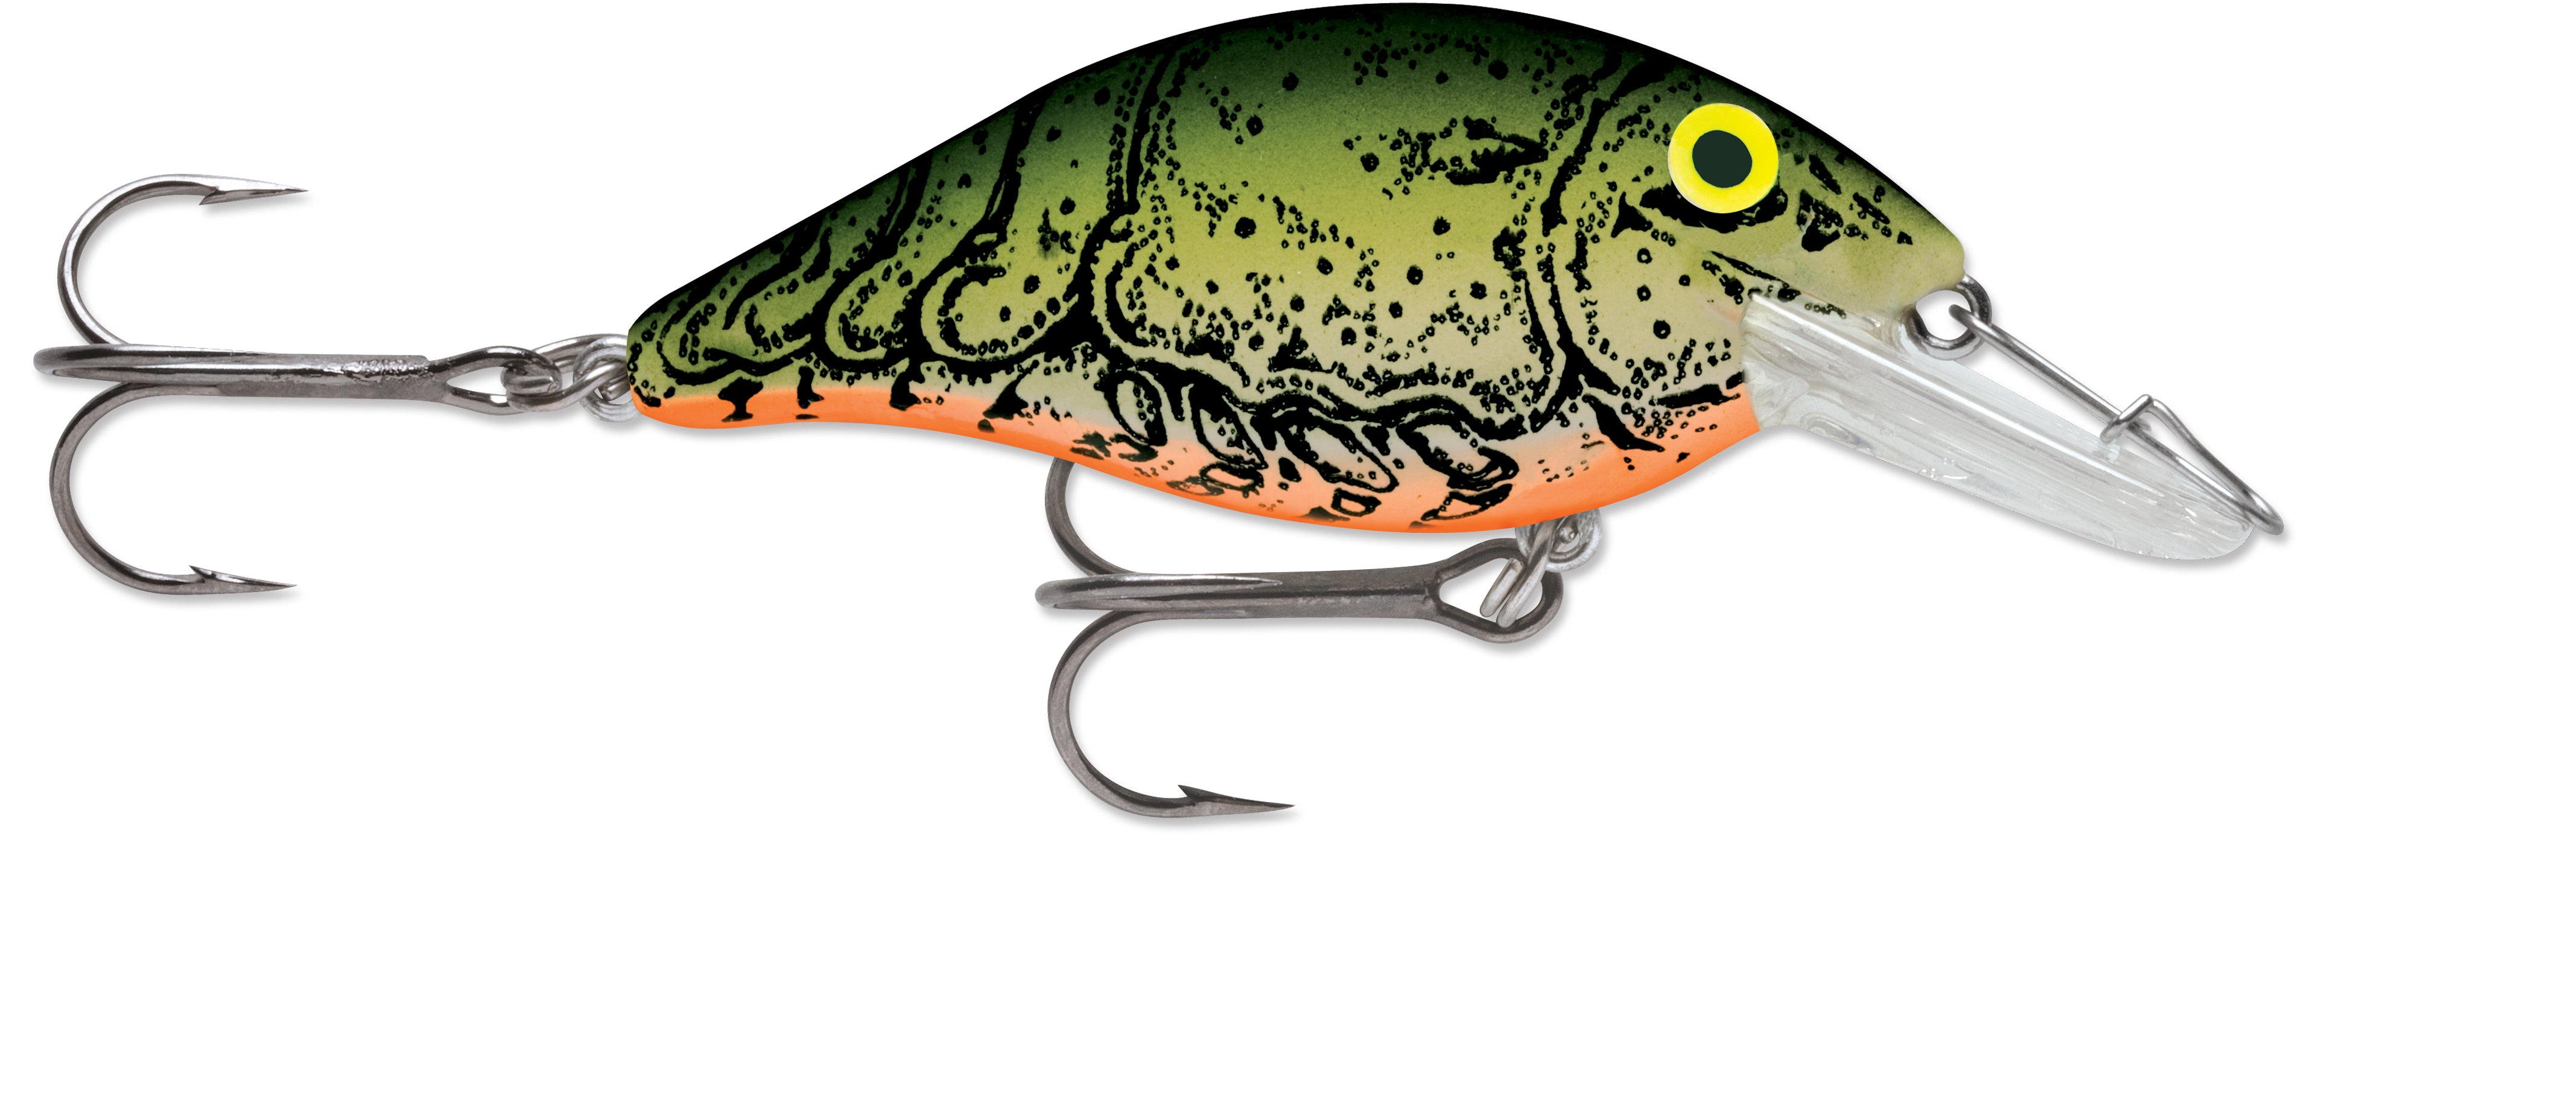 Green River Crawfish